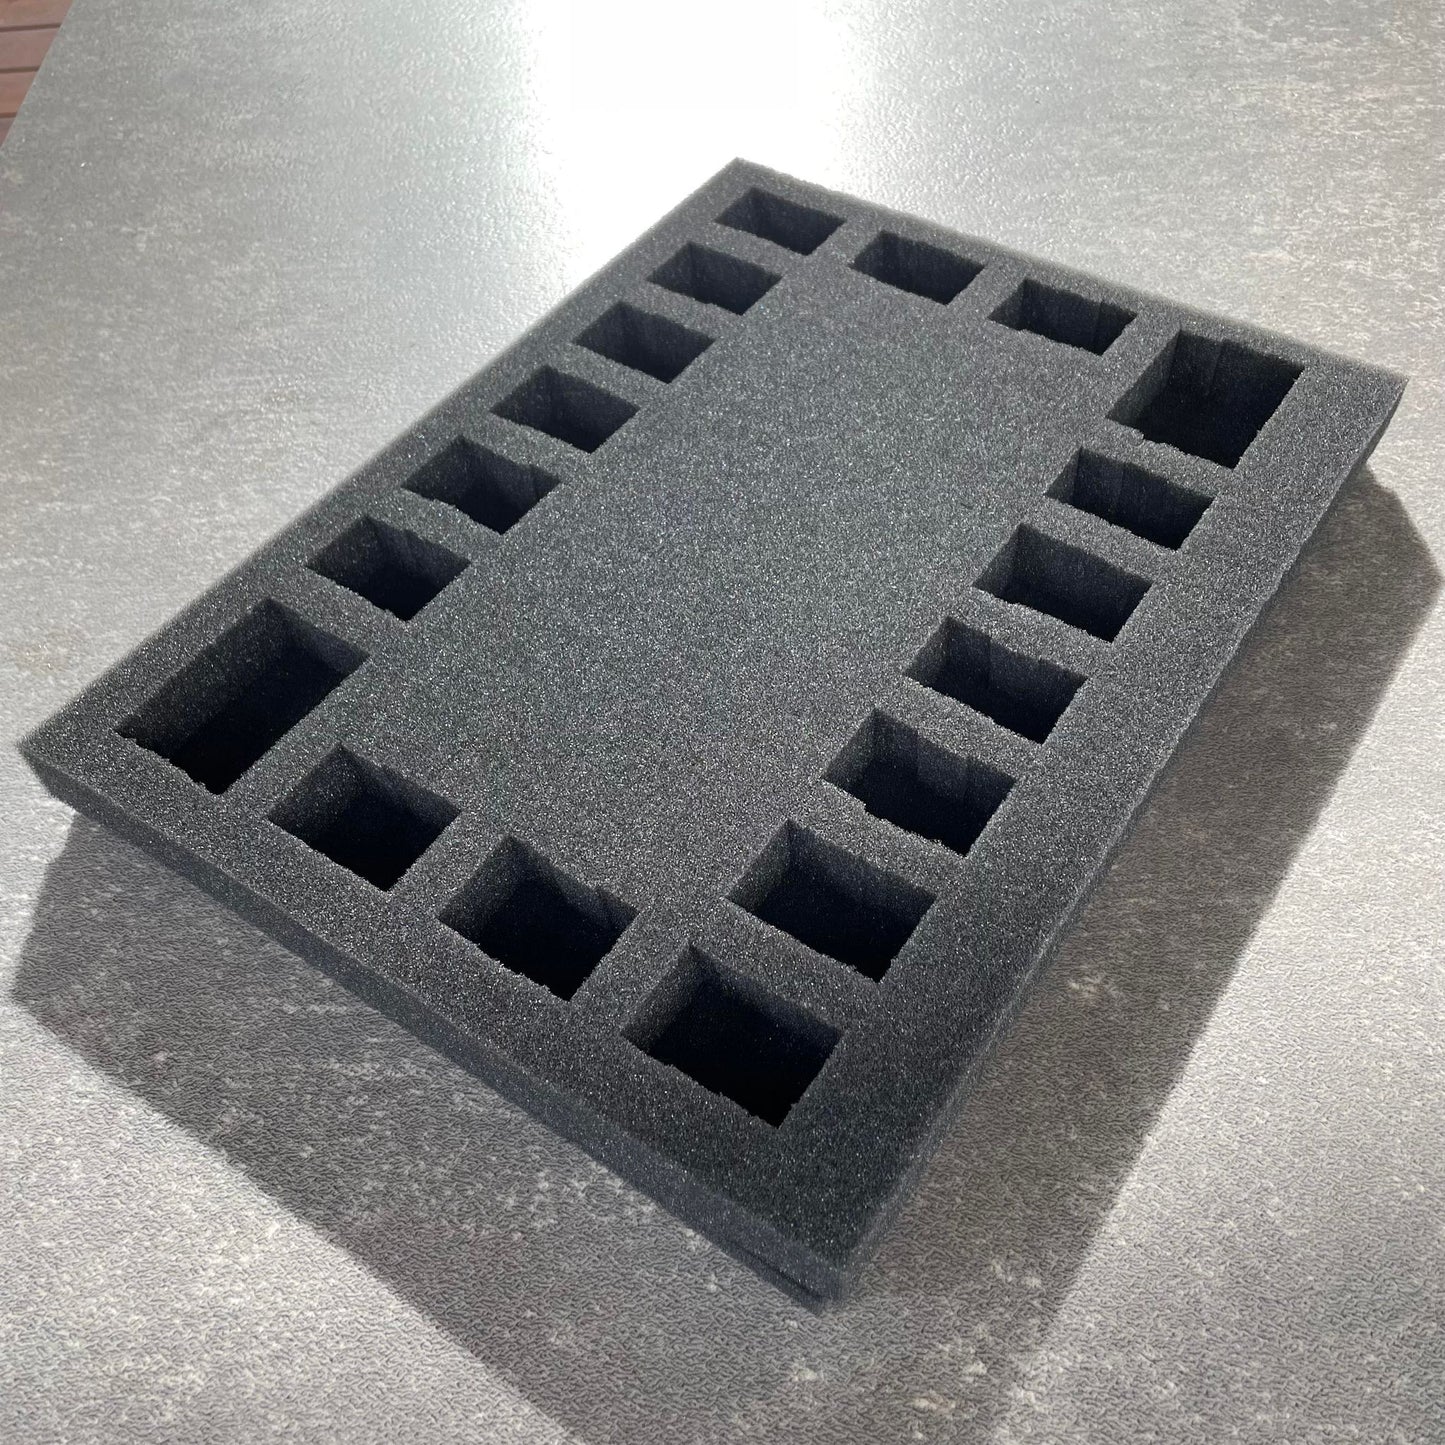 1 inch Pluck Foam tray (Seconds)